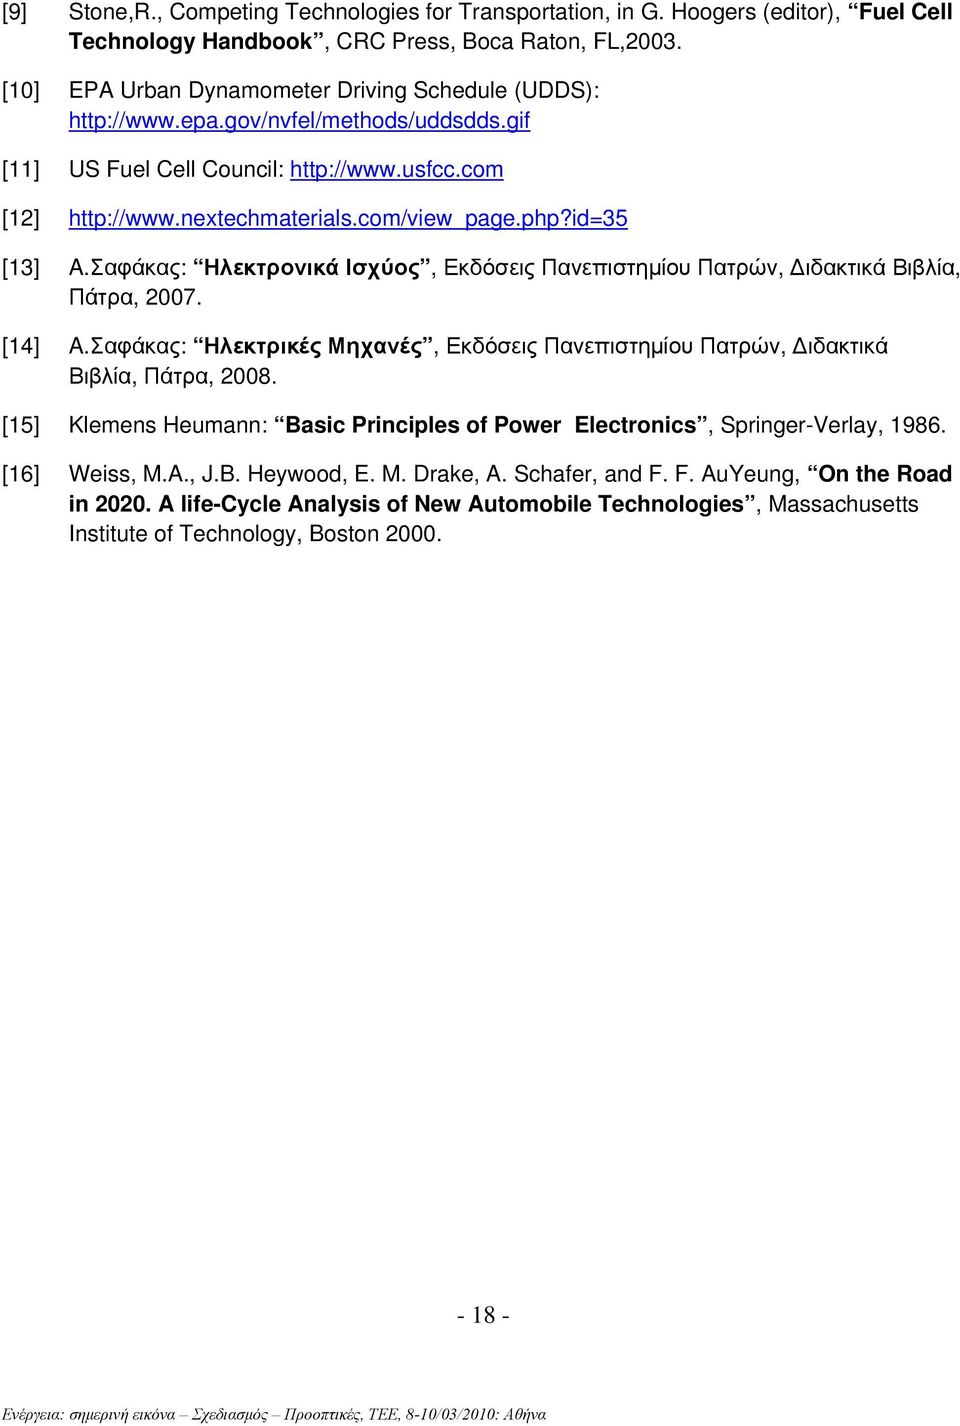 id=35 [13] A.Σαφάκας: Ηλεκτρονικά Ισχύος, Εκδόσεις Πανεπιστημίου Πατρών, Διδακτικά Βιβλία, Πάτρα, 2007. [14] A.